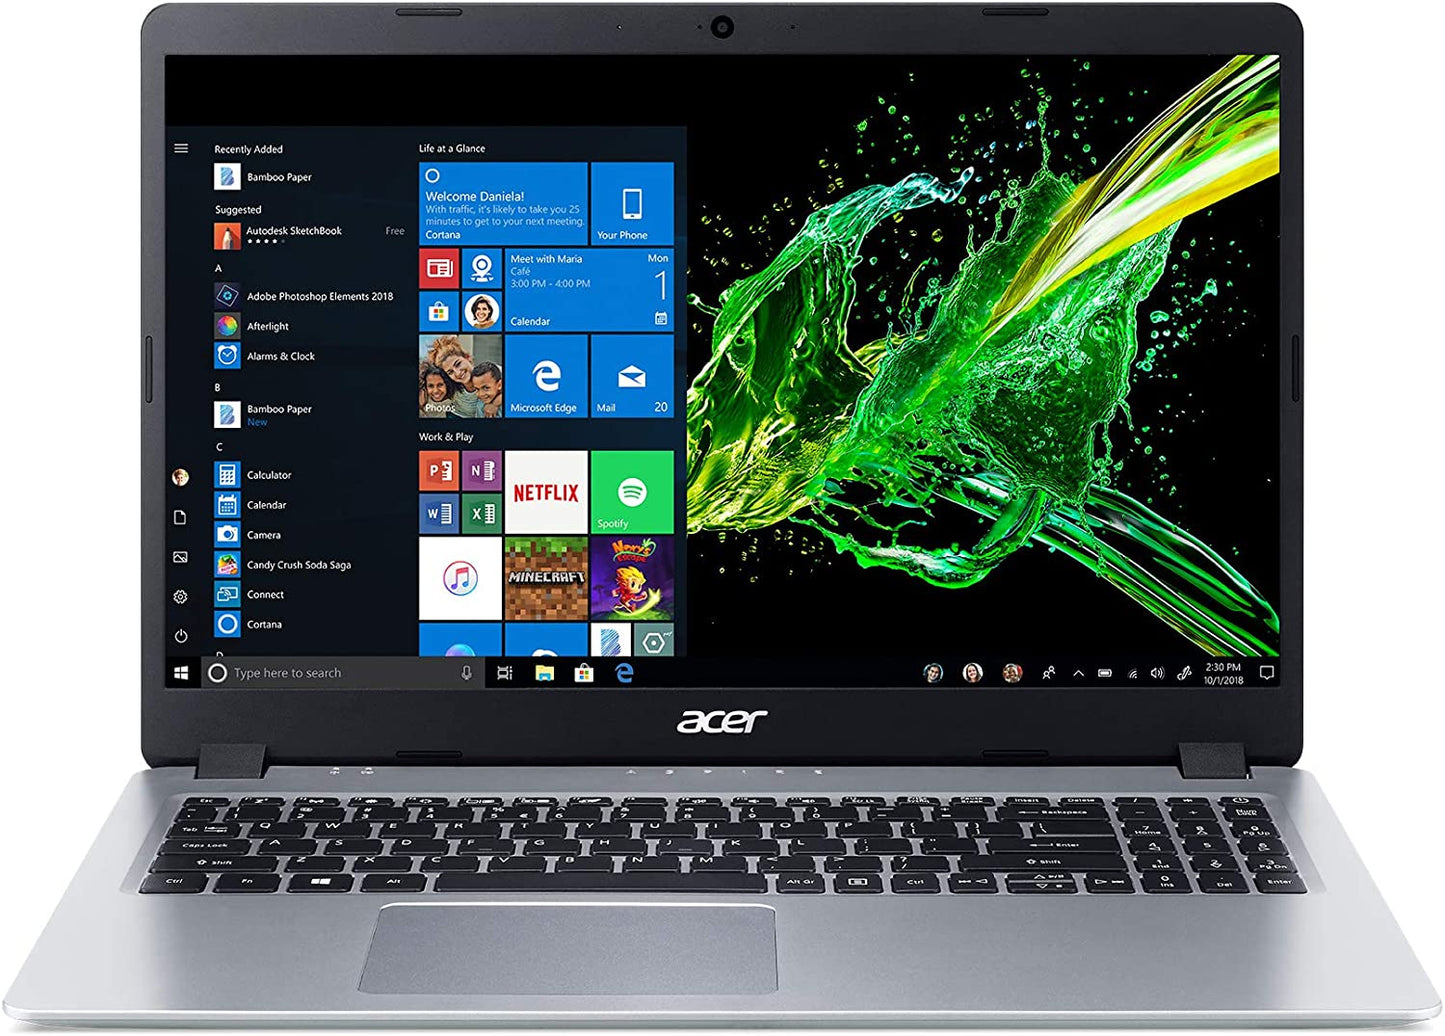 Aspire 5 Slim Laptop, 15.6 Inches Full HD IPS Display, AMD Ryzen 3 3200U, Vega 3 Graphics, 4GB DDR4, 128GB SSD, Backlit Keyboard, Windows 10 in S Mode, A515-43-R19L, Silver